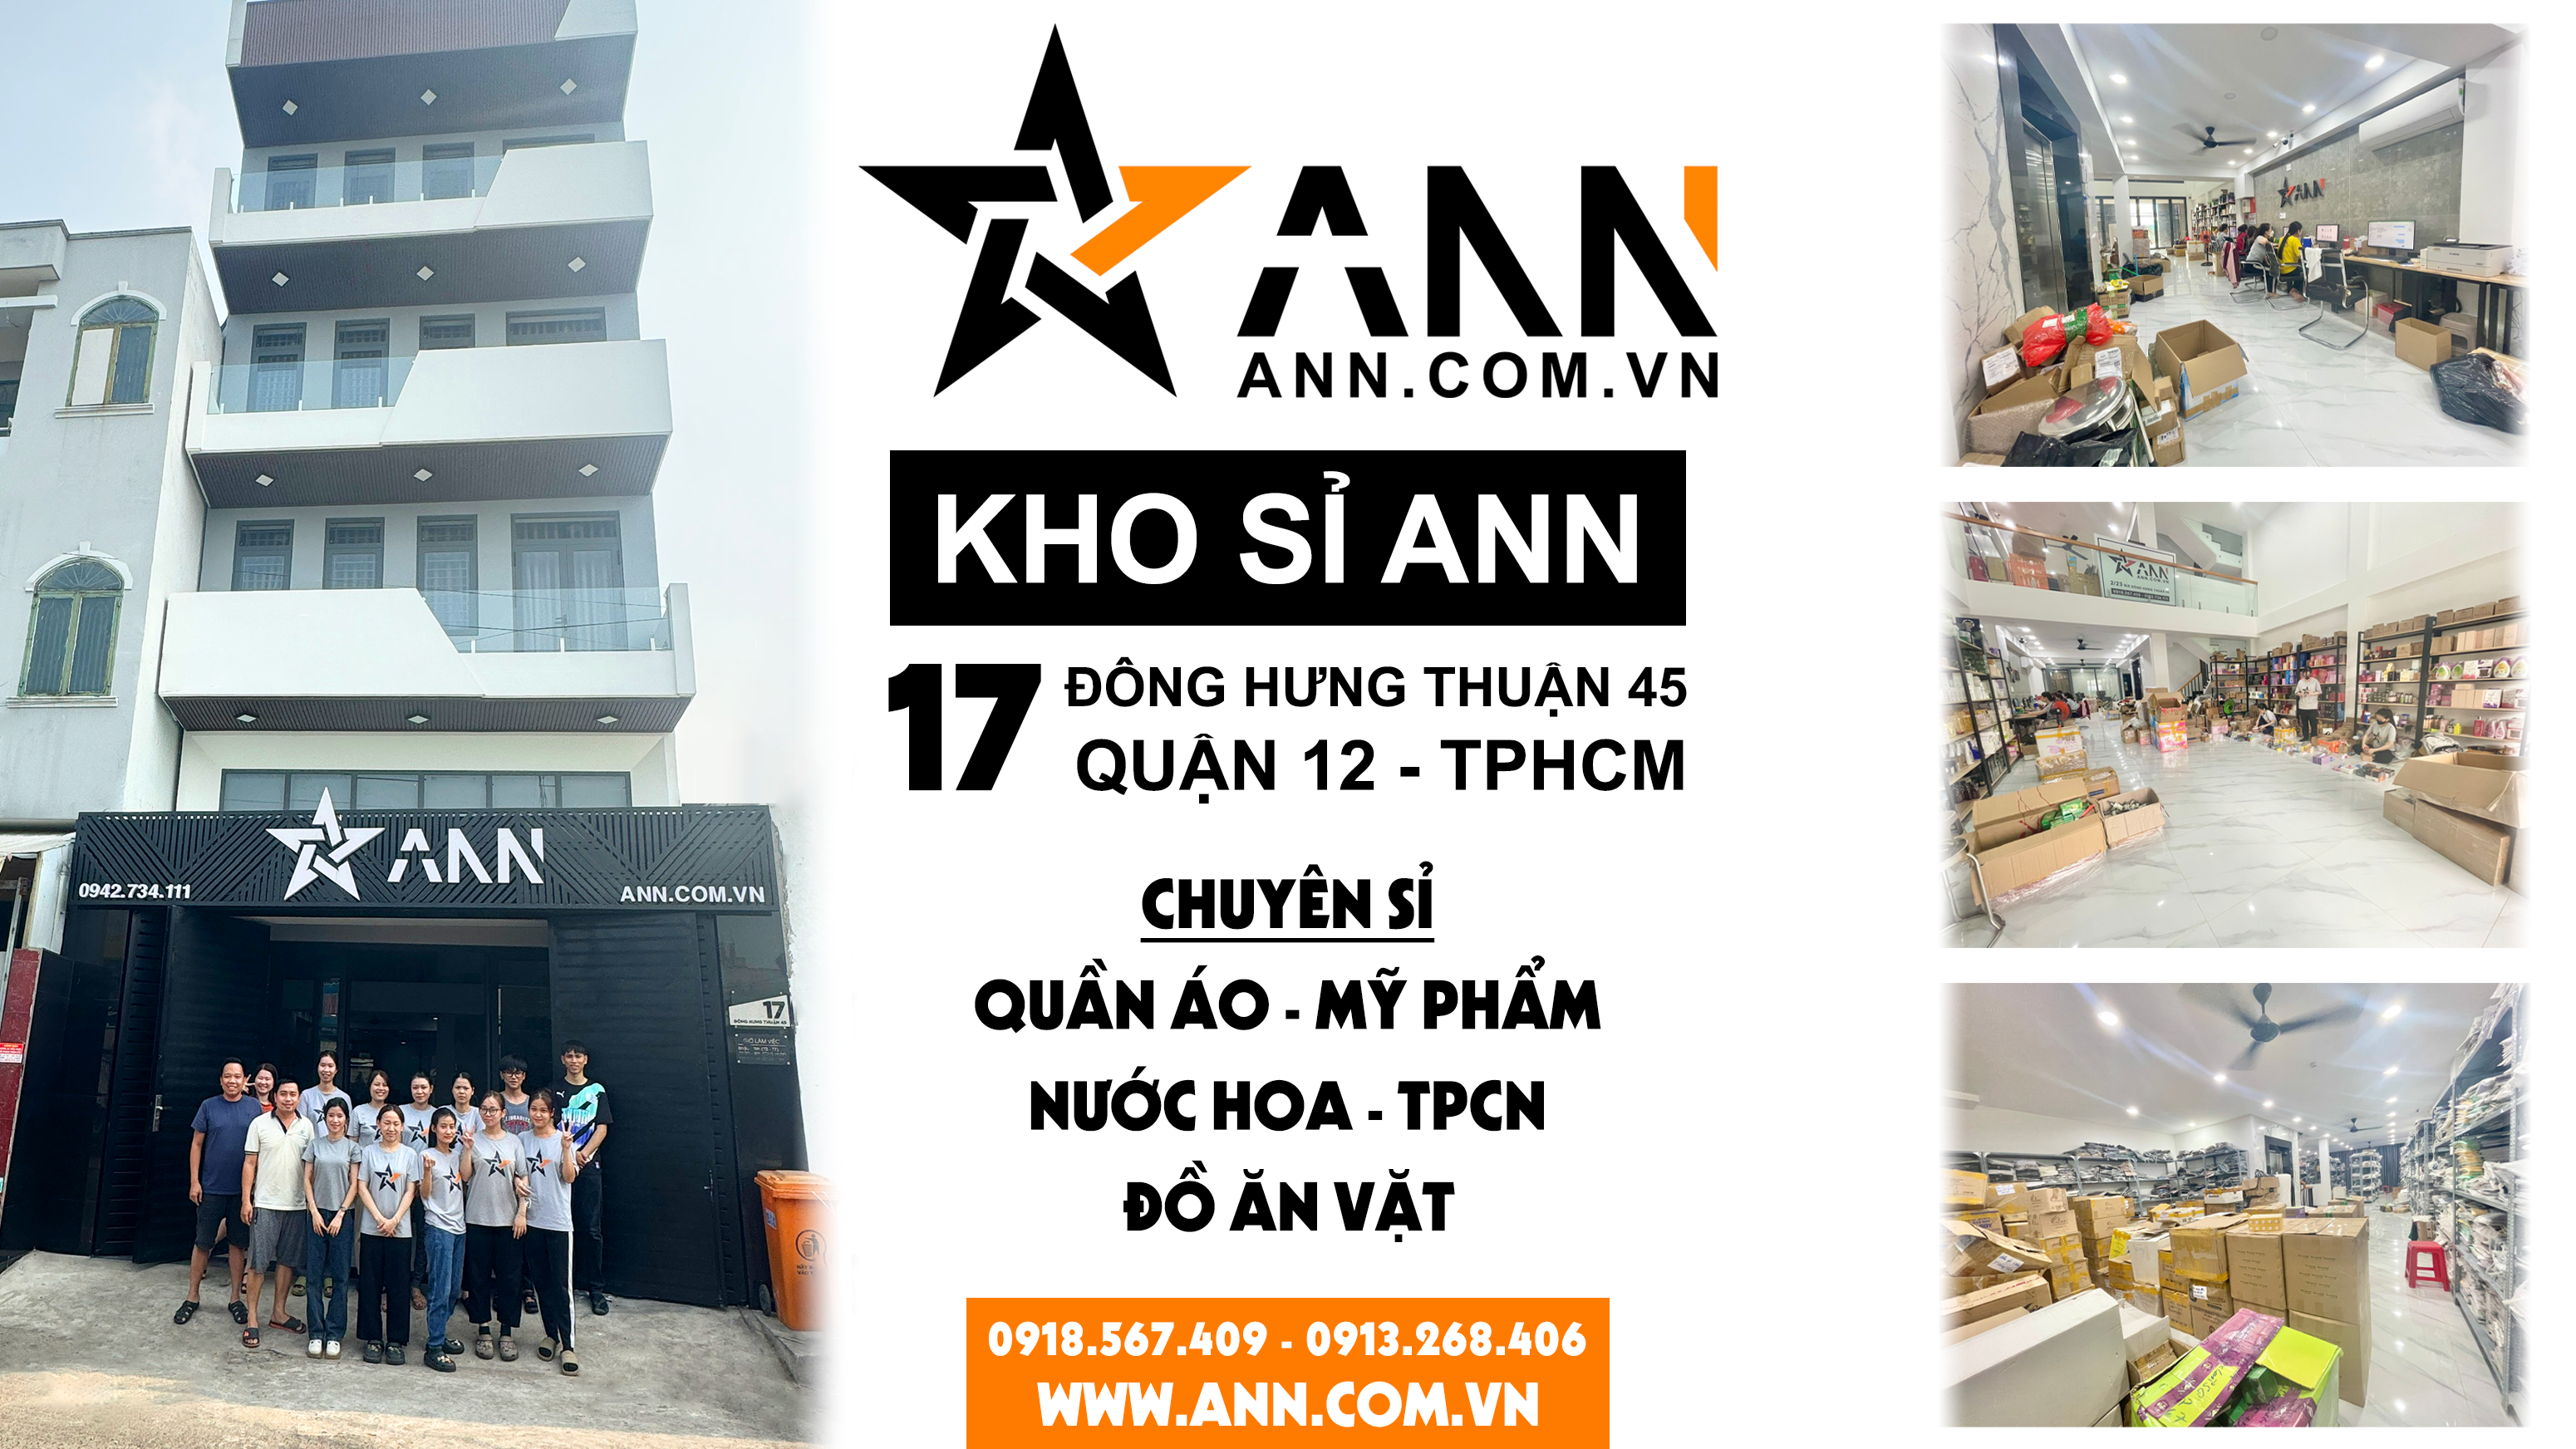 ANN - The prestigious wholesale fashion clothing supplier in Vietnam